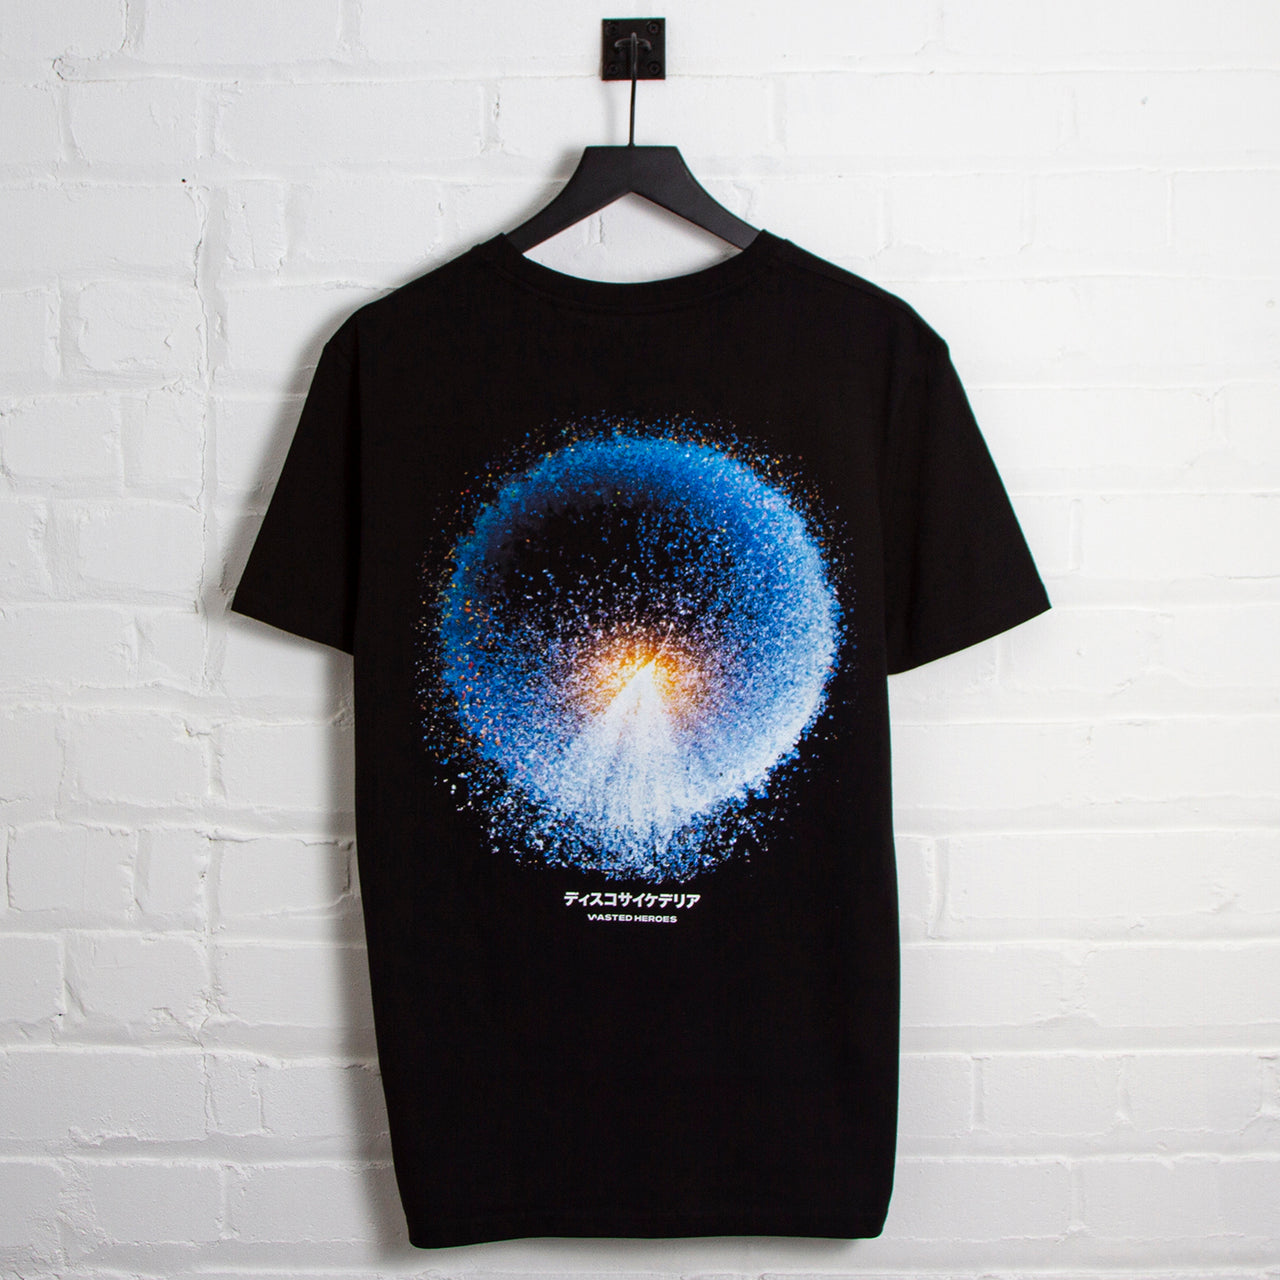 022 Disco Psychedelia Back Print - Tshirt - Black